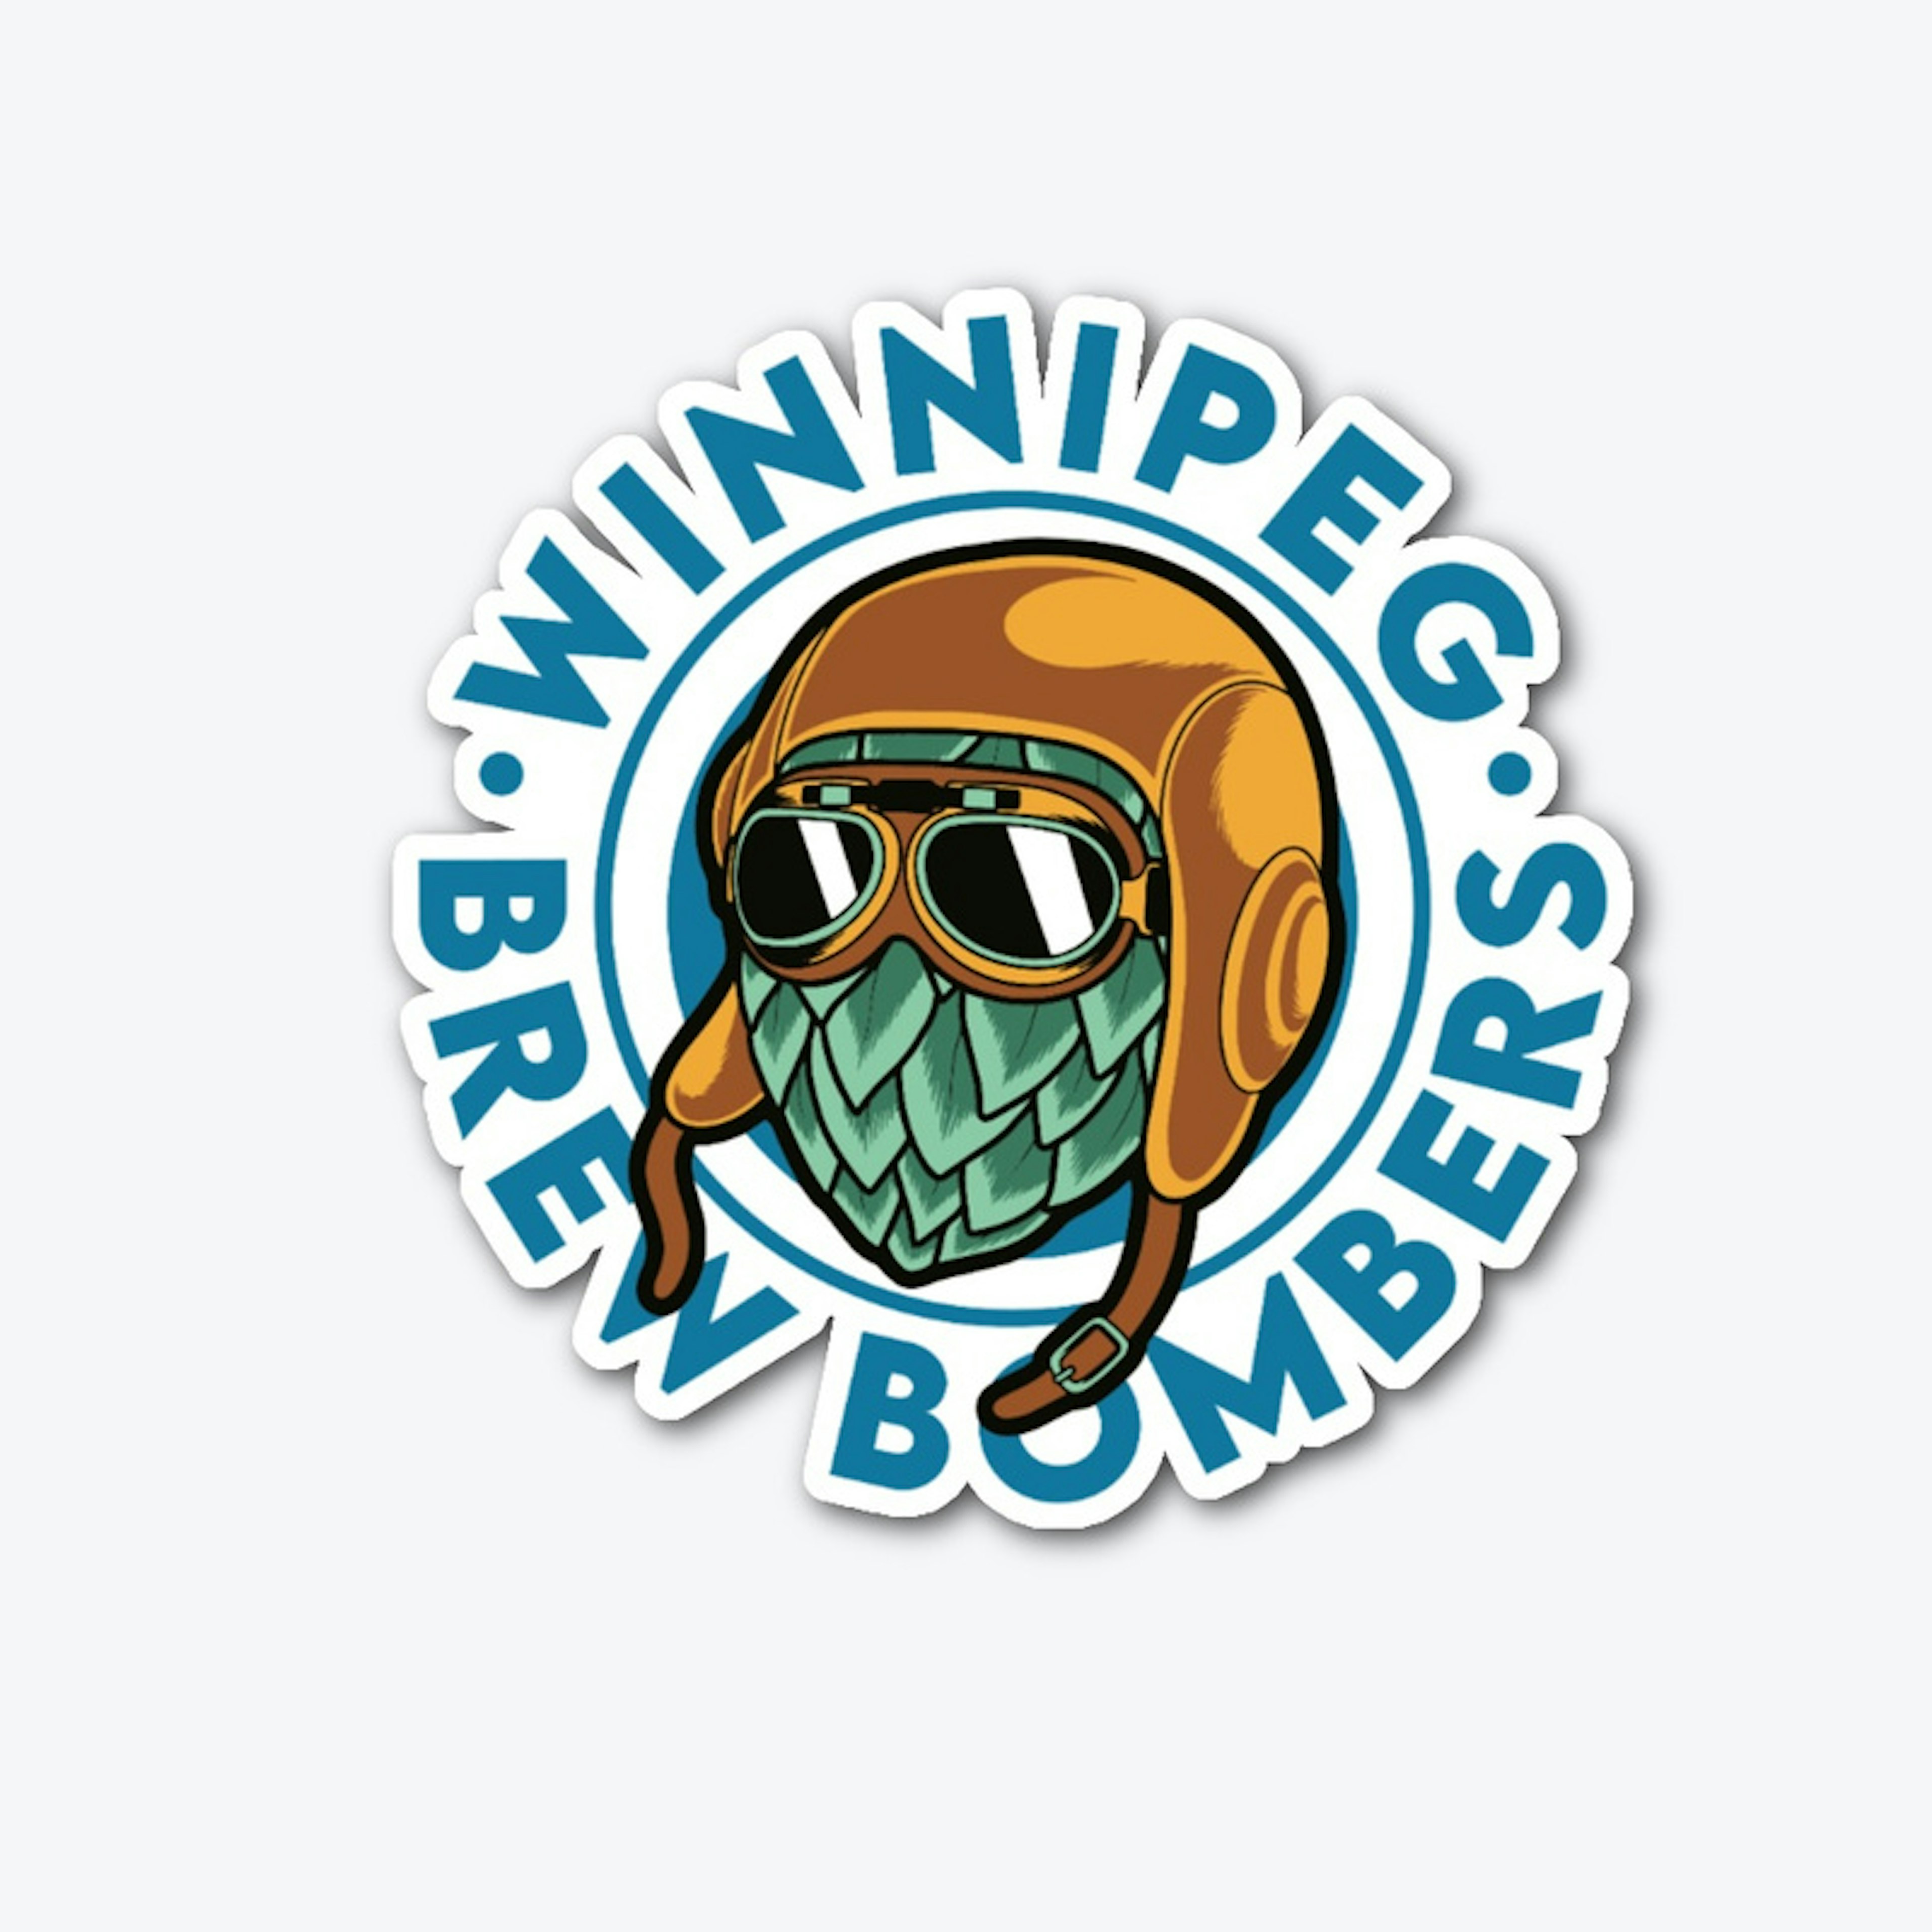 Winnipeg Brew Bombers Named Logo